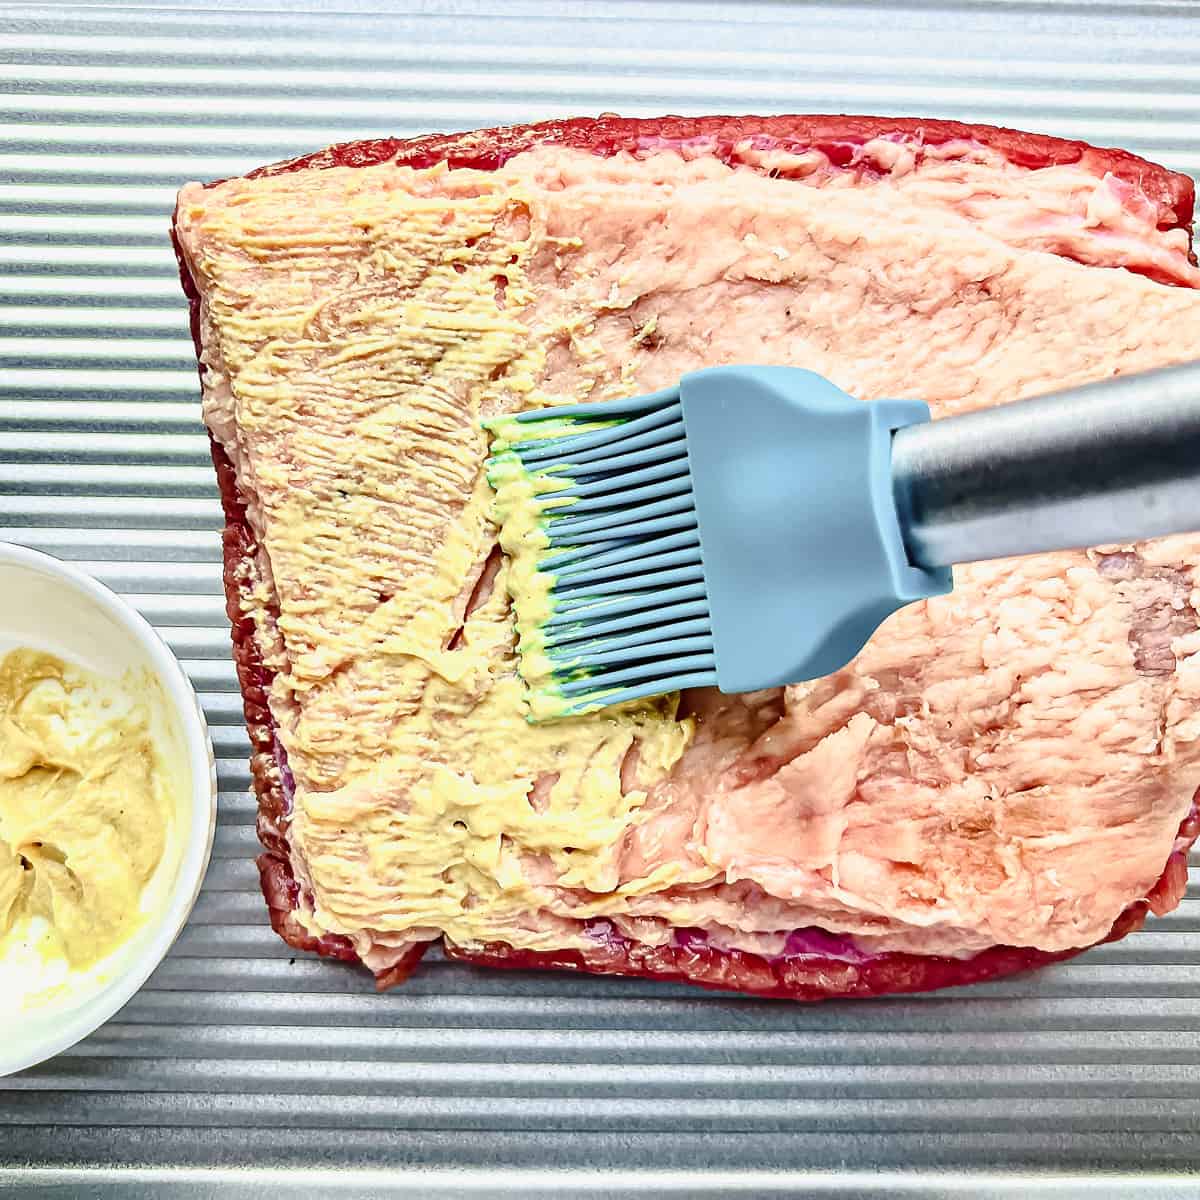 Brushing mustard on uncooked corned beef.